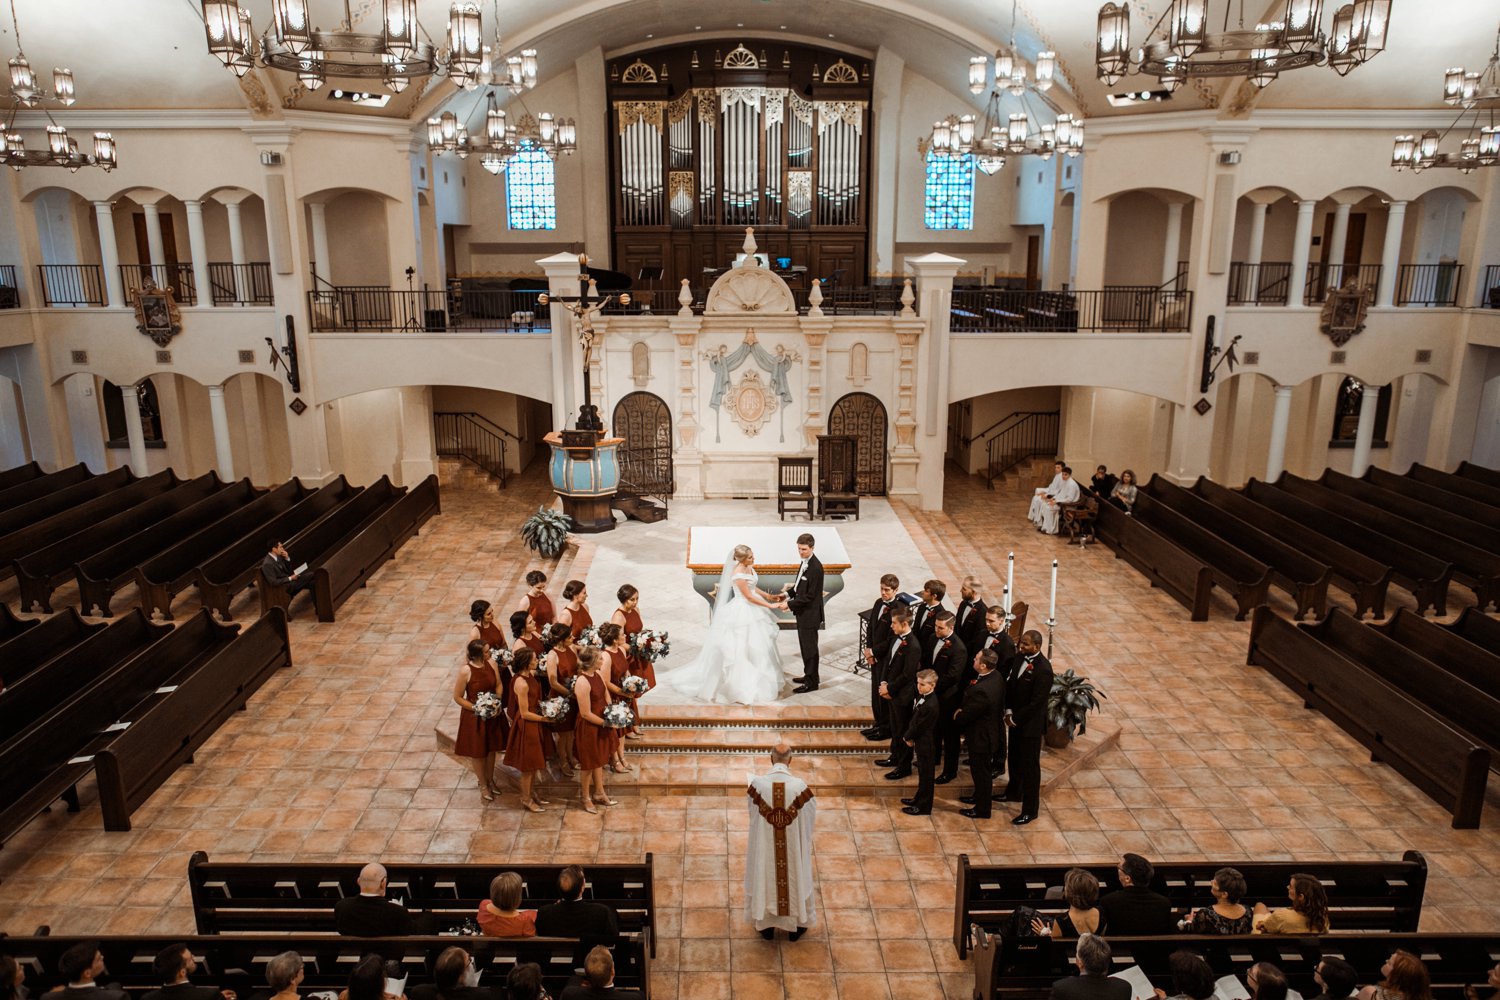  images by feliciathephotographer.com | destination wedding photographer | kansas city | summertime | classic | ceremony | visitation church | catholic | symmetry | chandelier | bride and groom | organ | 